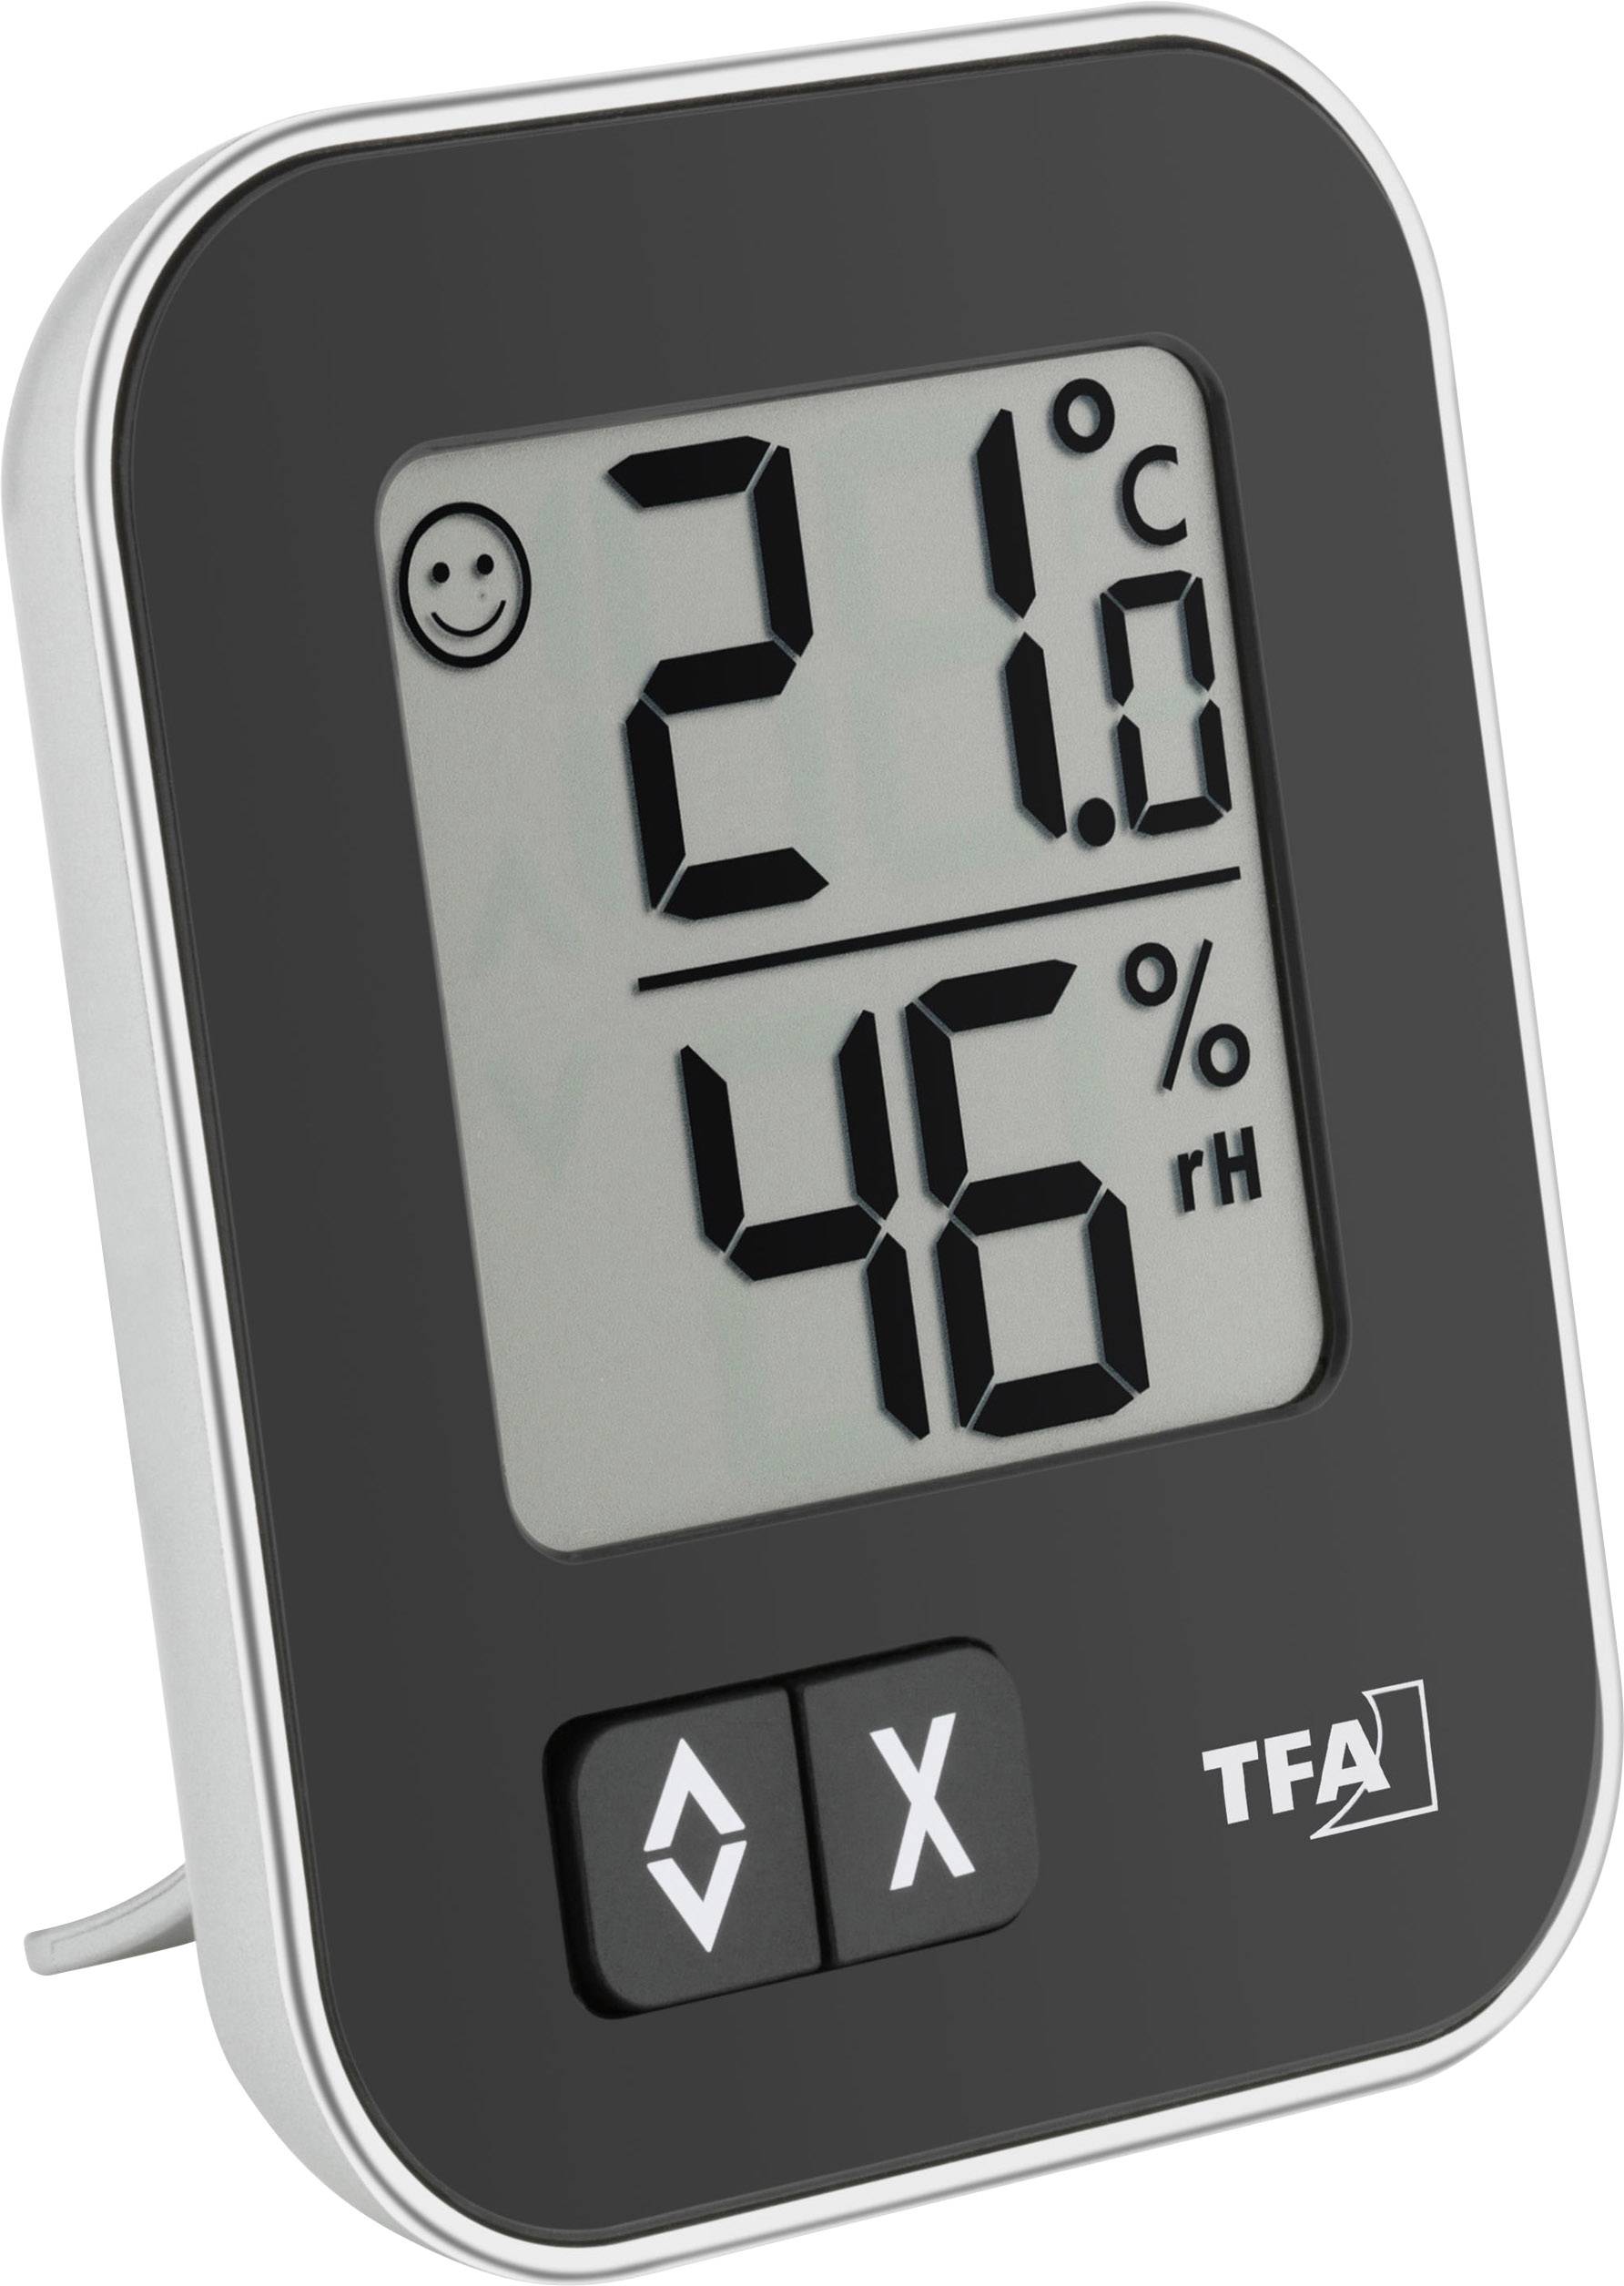 TFA-DOSTMANN Luftfeuchtemessgerät (Hygrometer) TFA MOXX Digitales Thermo-Hygrometer 20 % rF 99 % rF